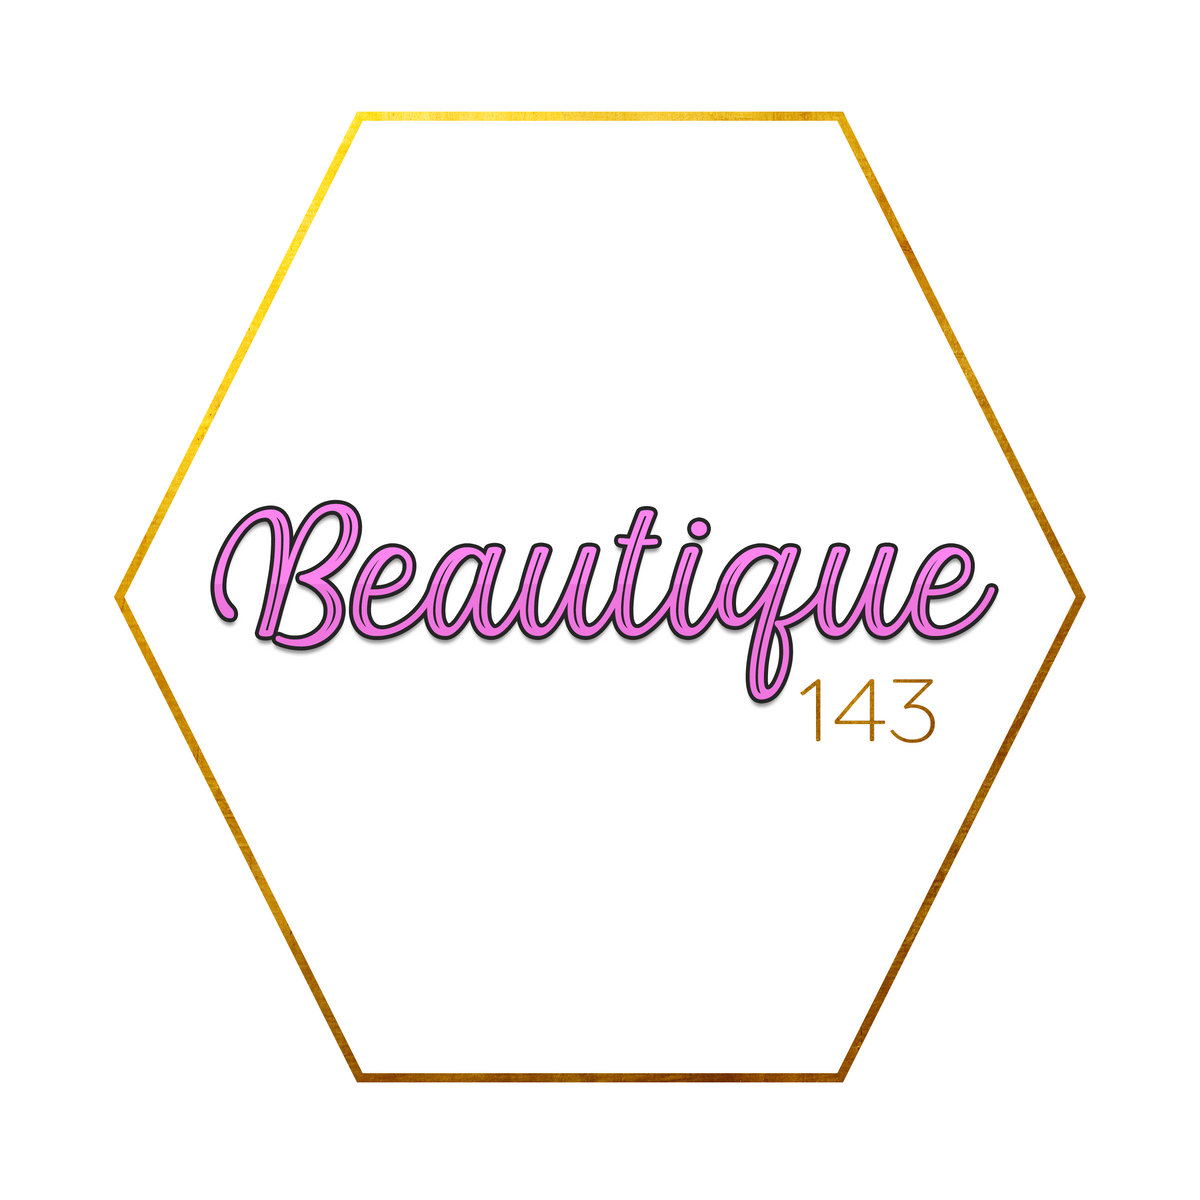 Beautique143